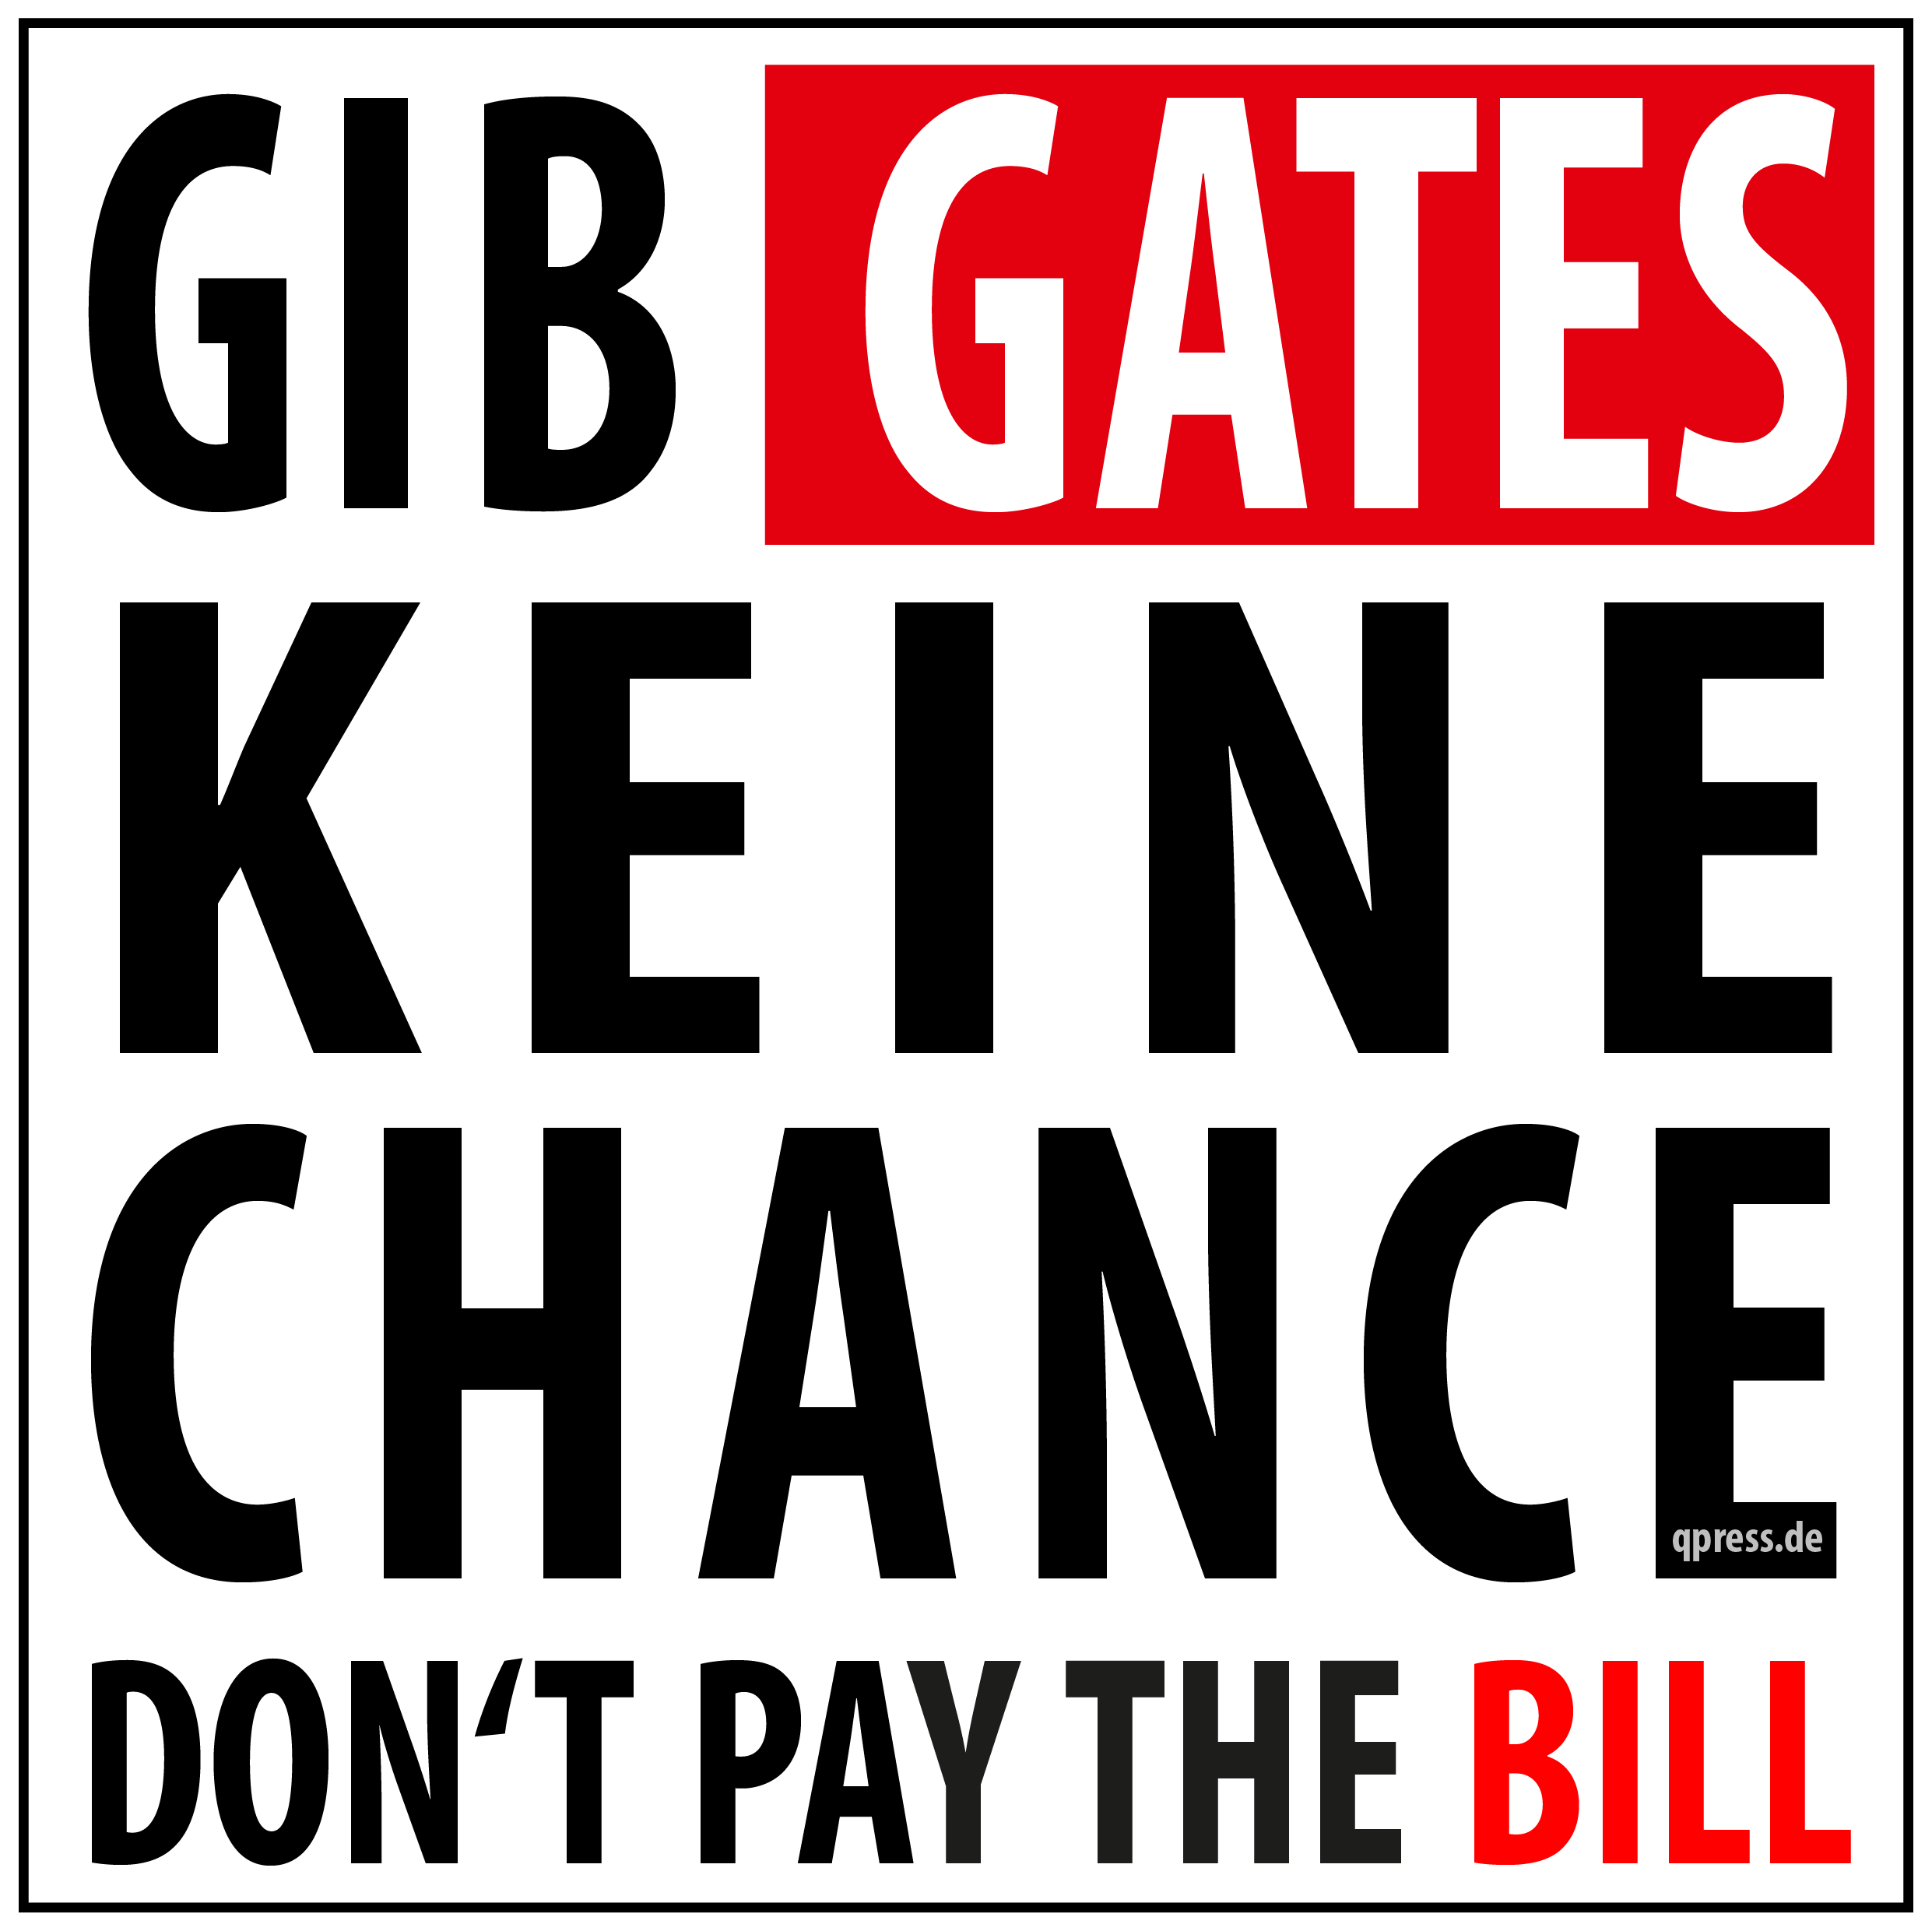 Gib GATES keine Chance Futura dont pay the BILL